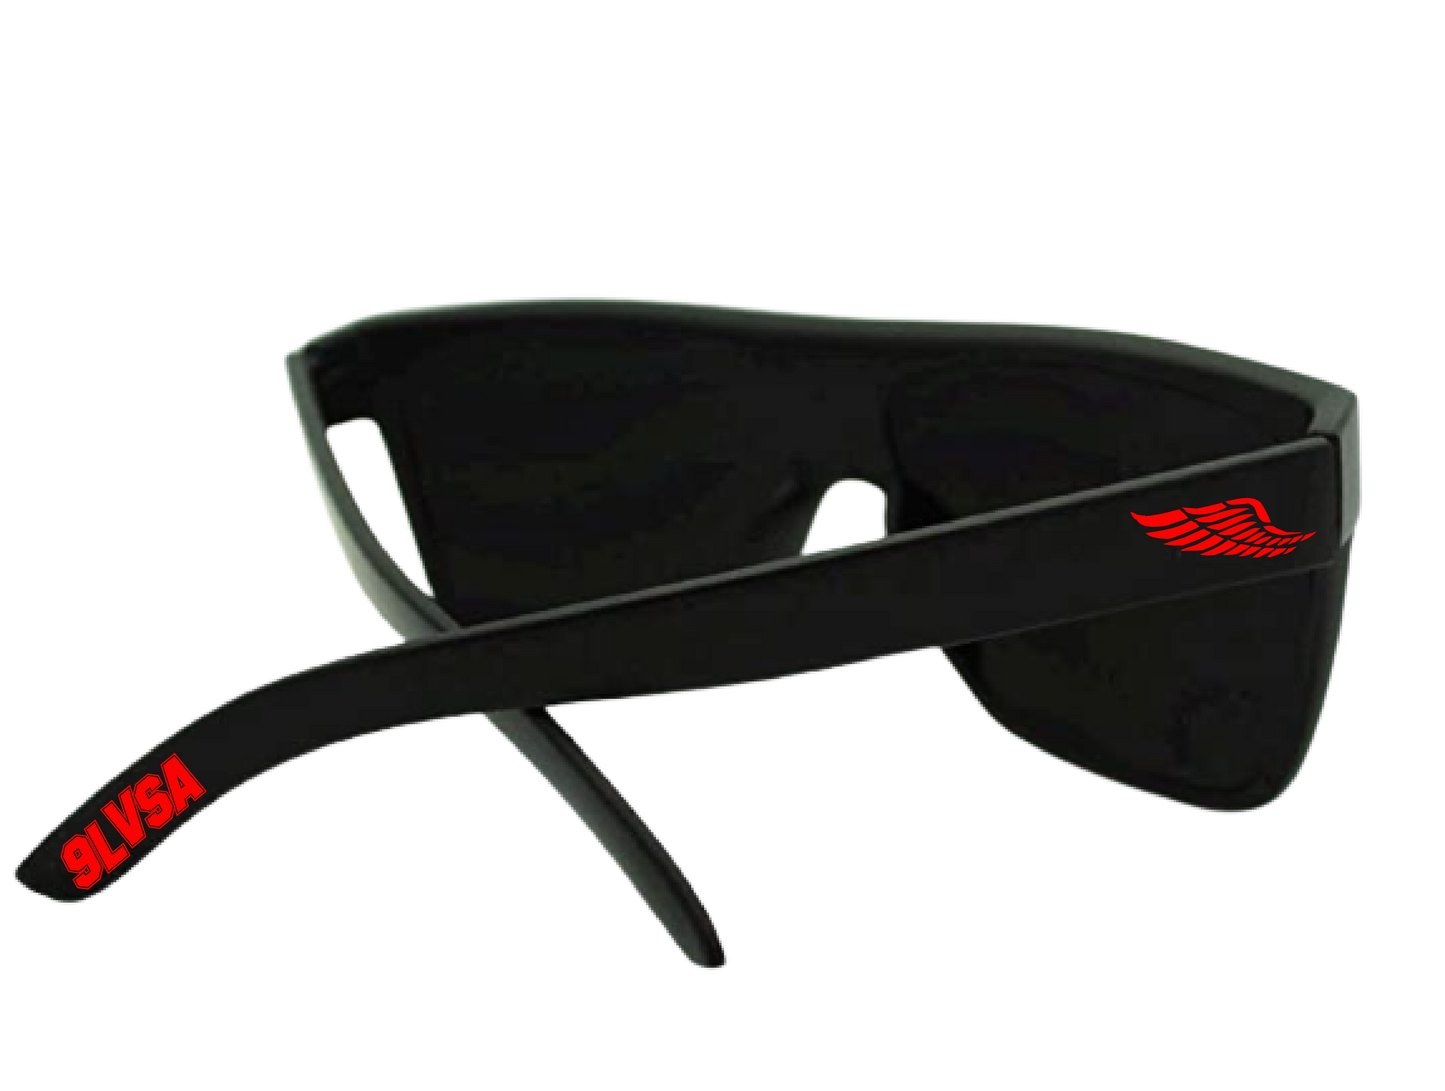 20/20 Vision Sunglasses